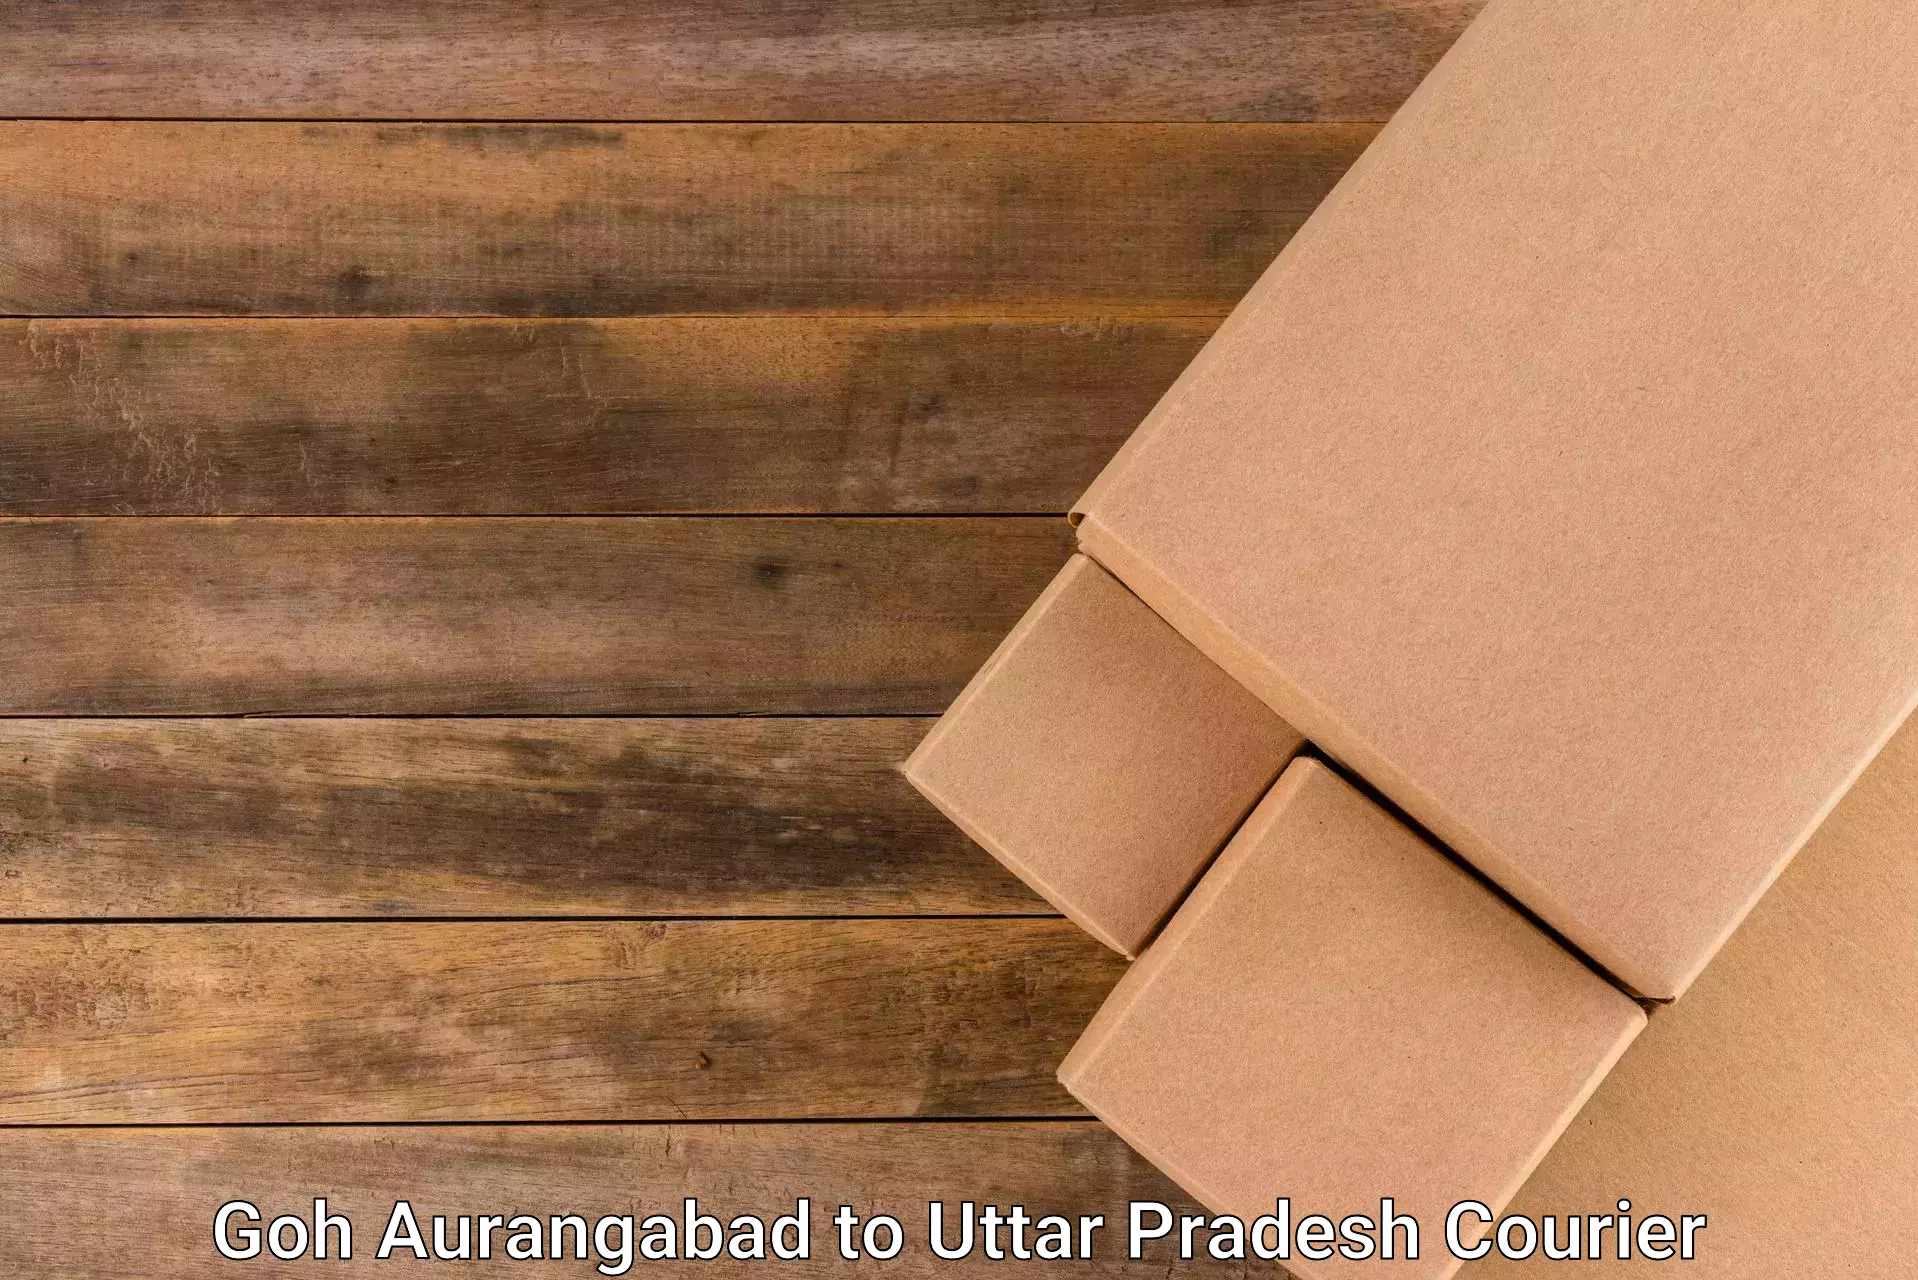 Online package tracking Goh Aurangabad to Uttar Pradesh